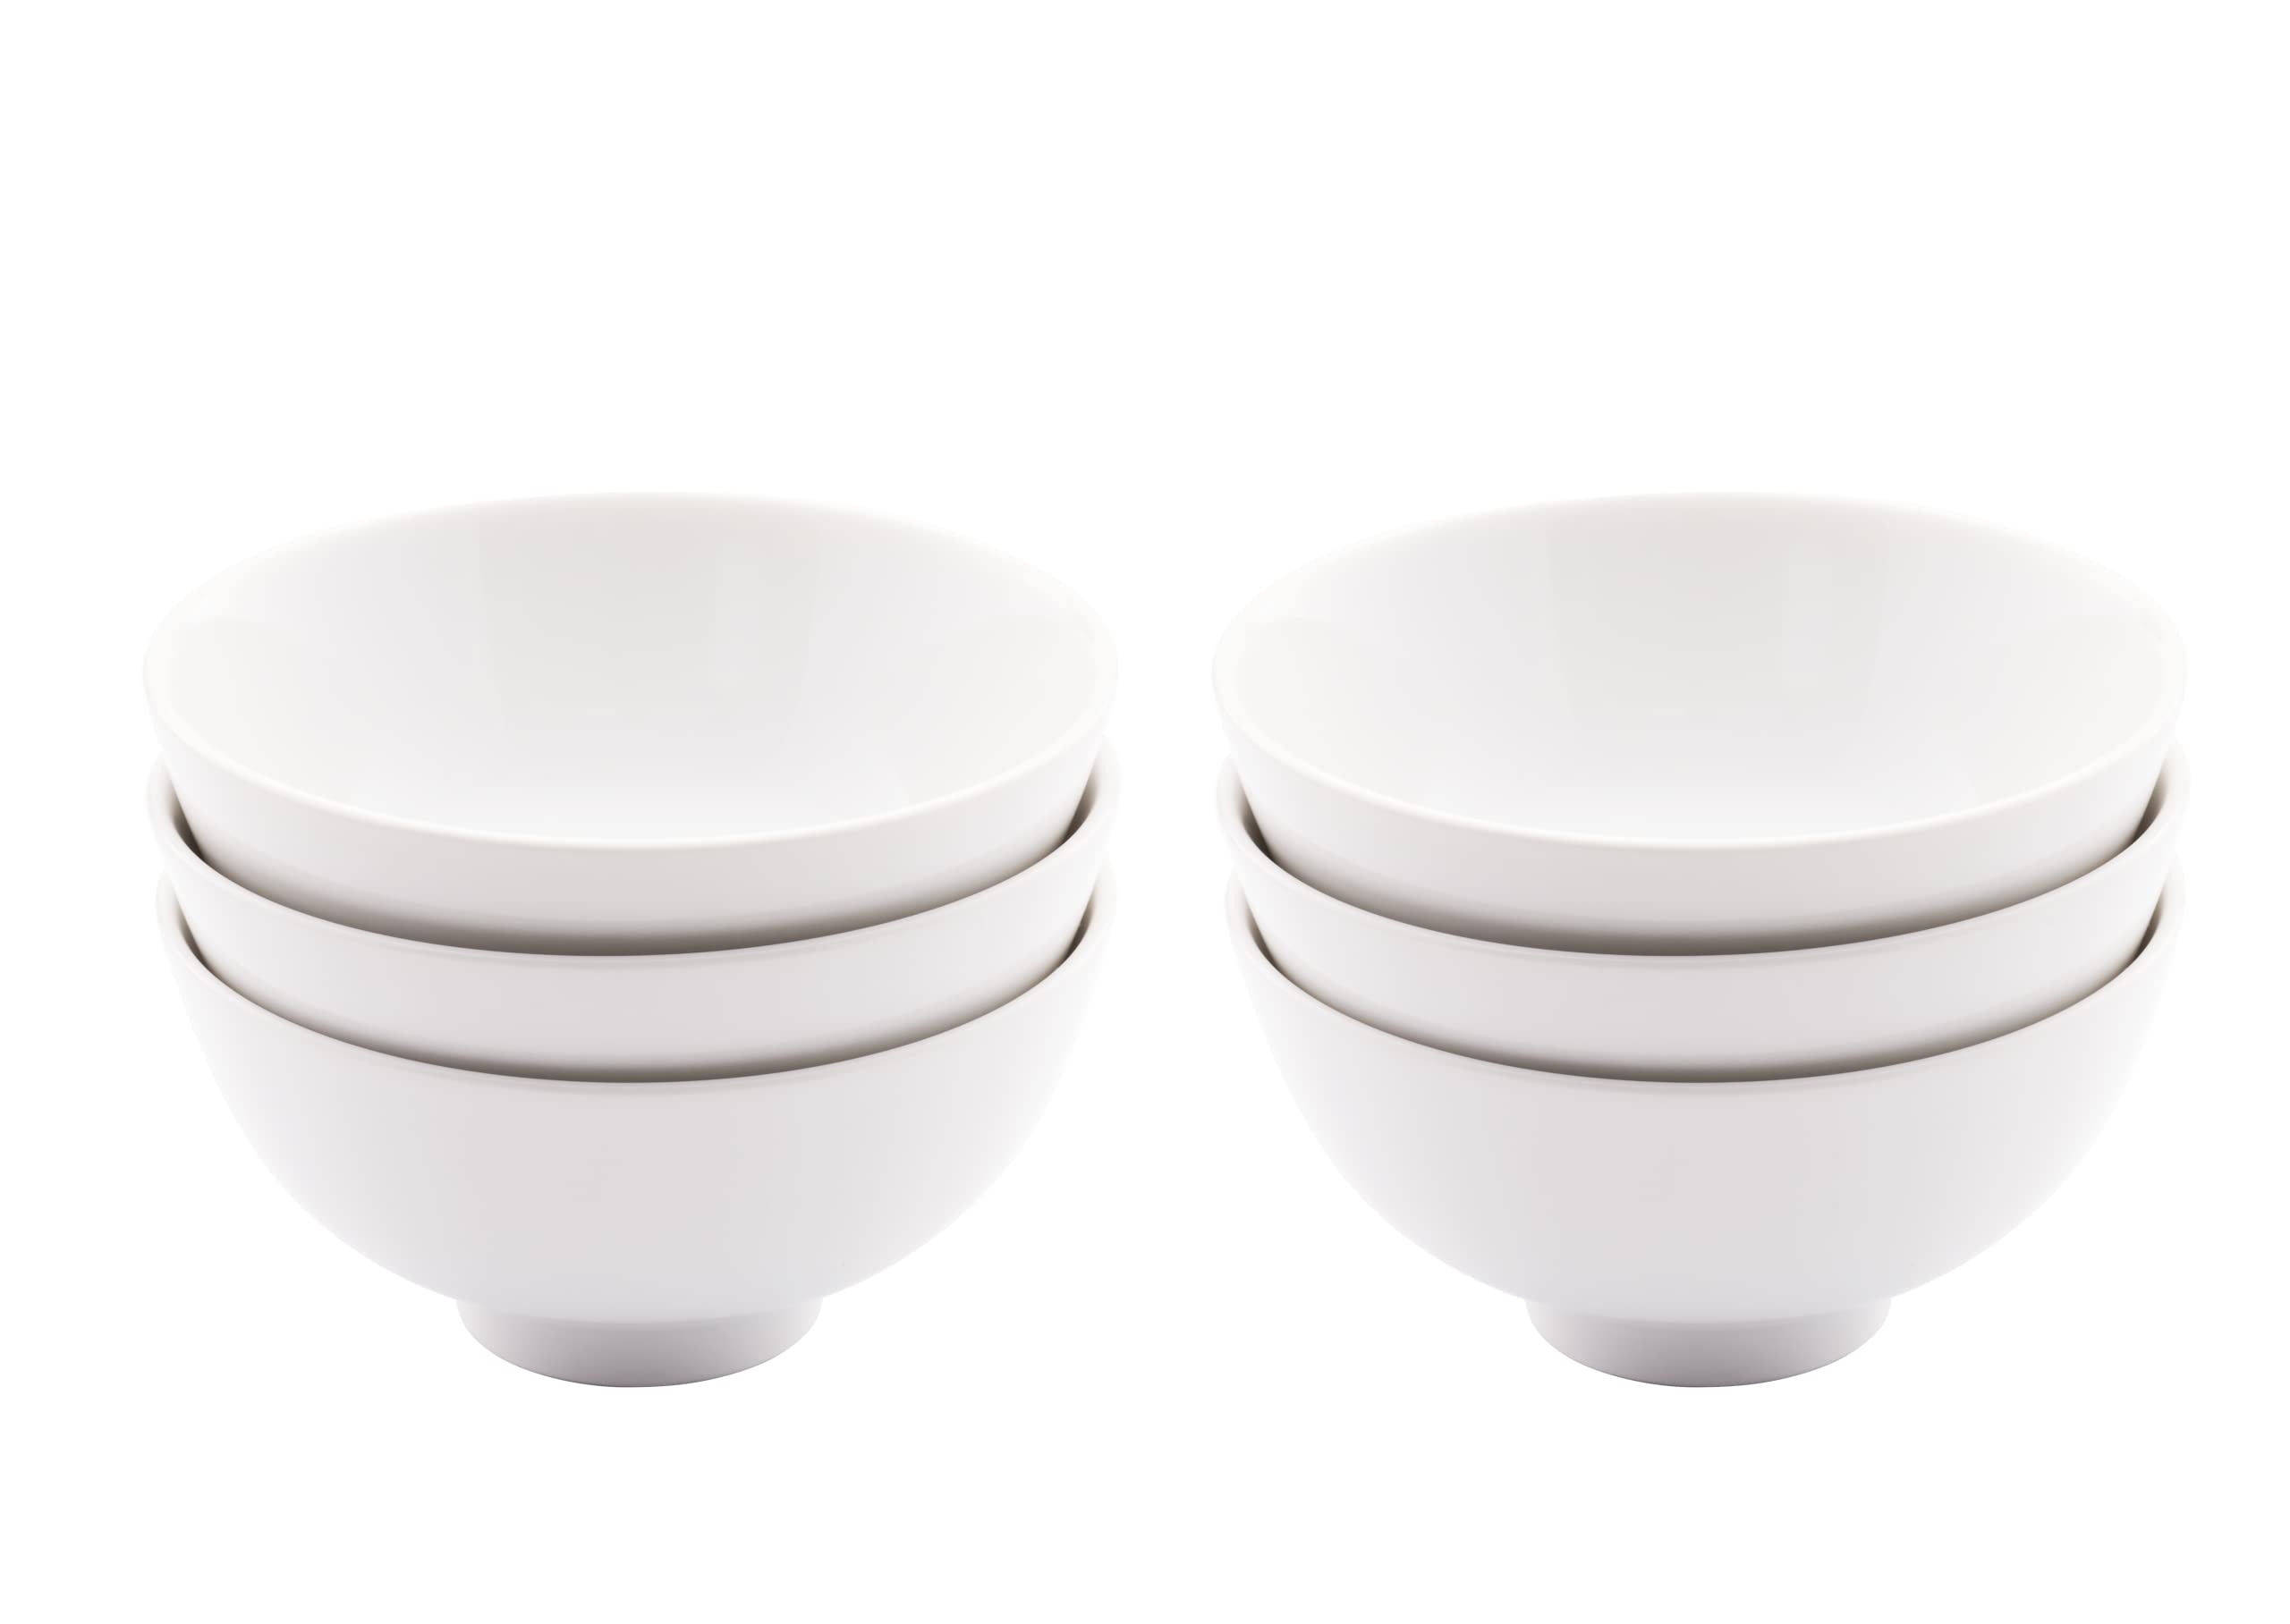 Nethan by MinhLong Premium Porcelain Ceramic Rice/Soup Bowl Set of 6 (Plain White)